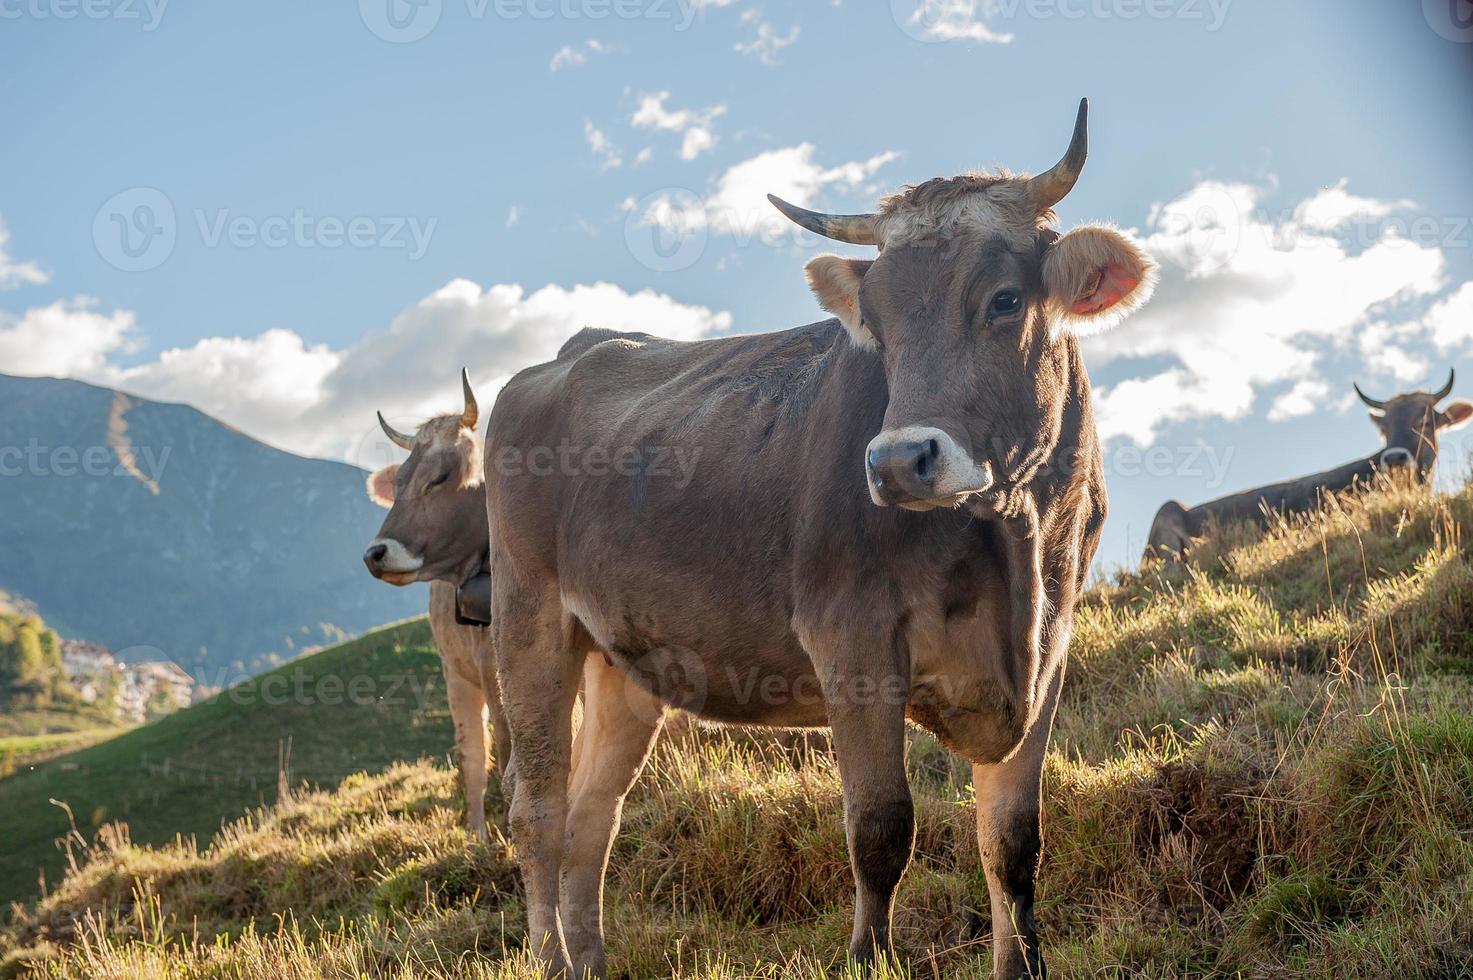 vacas com bezerros pastando foto